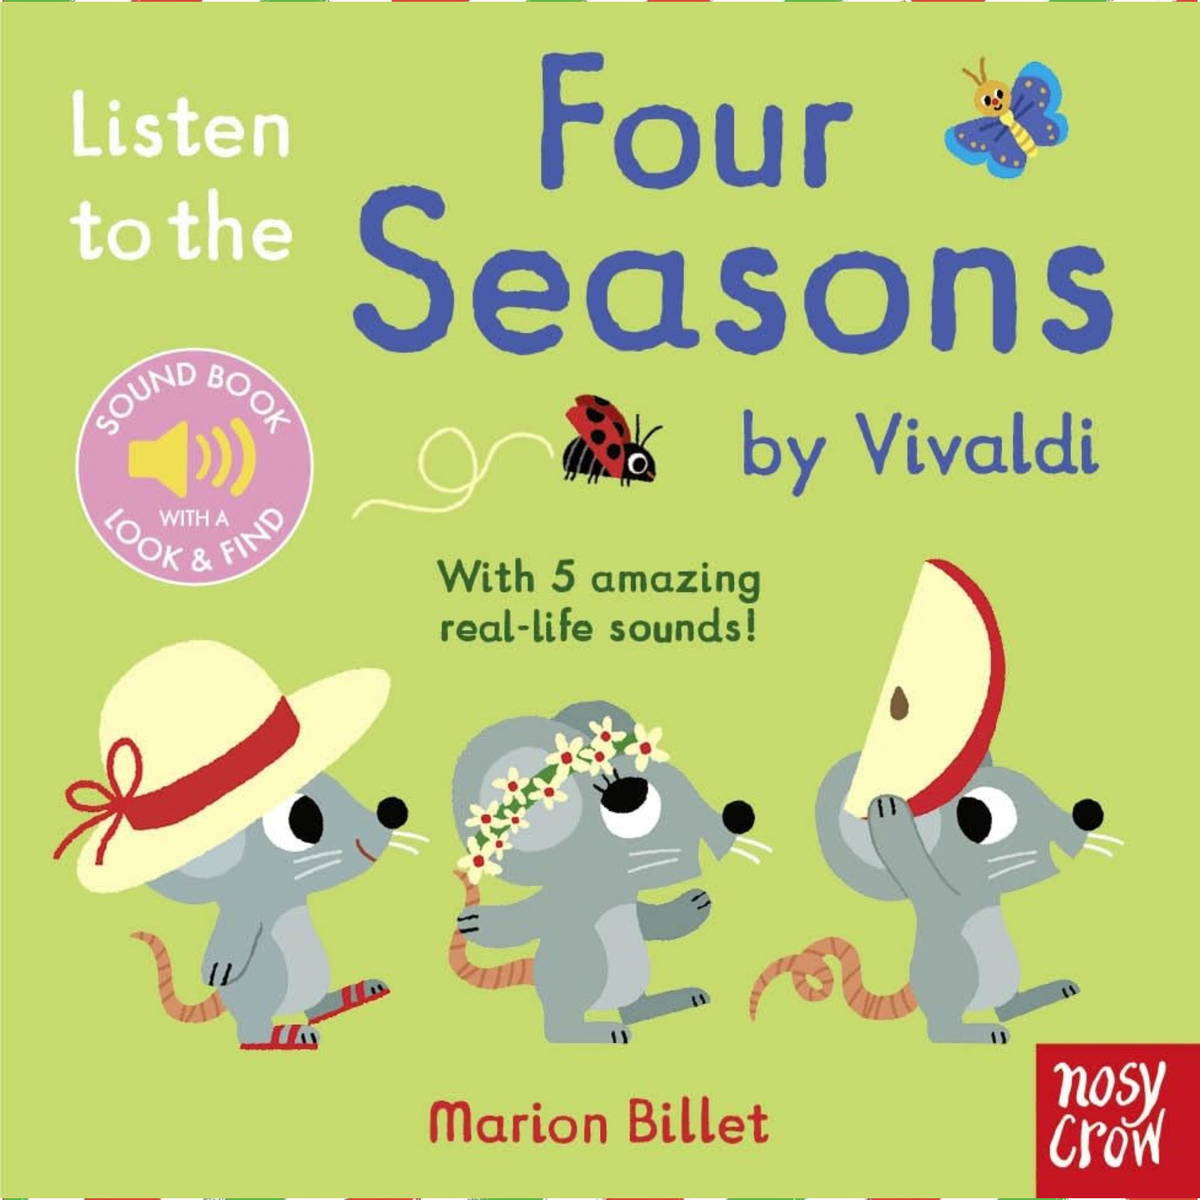 Listen to the Four Seasons by Vivaldi